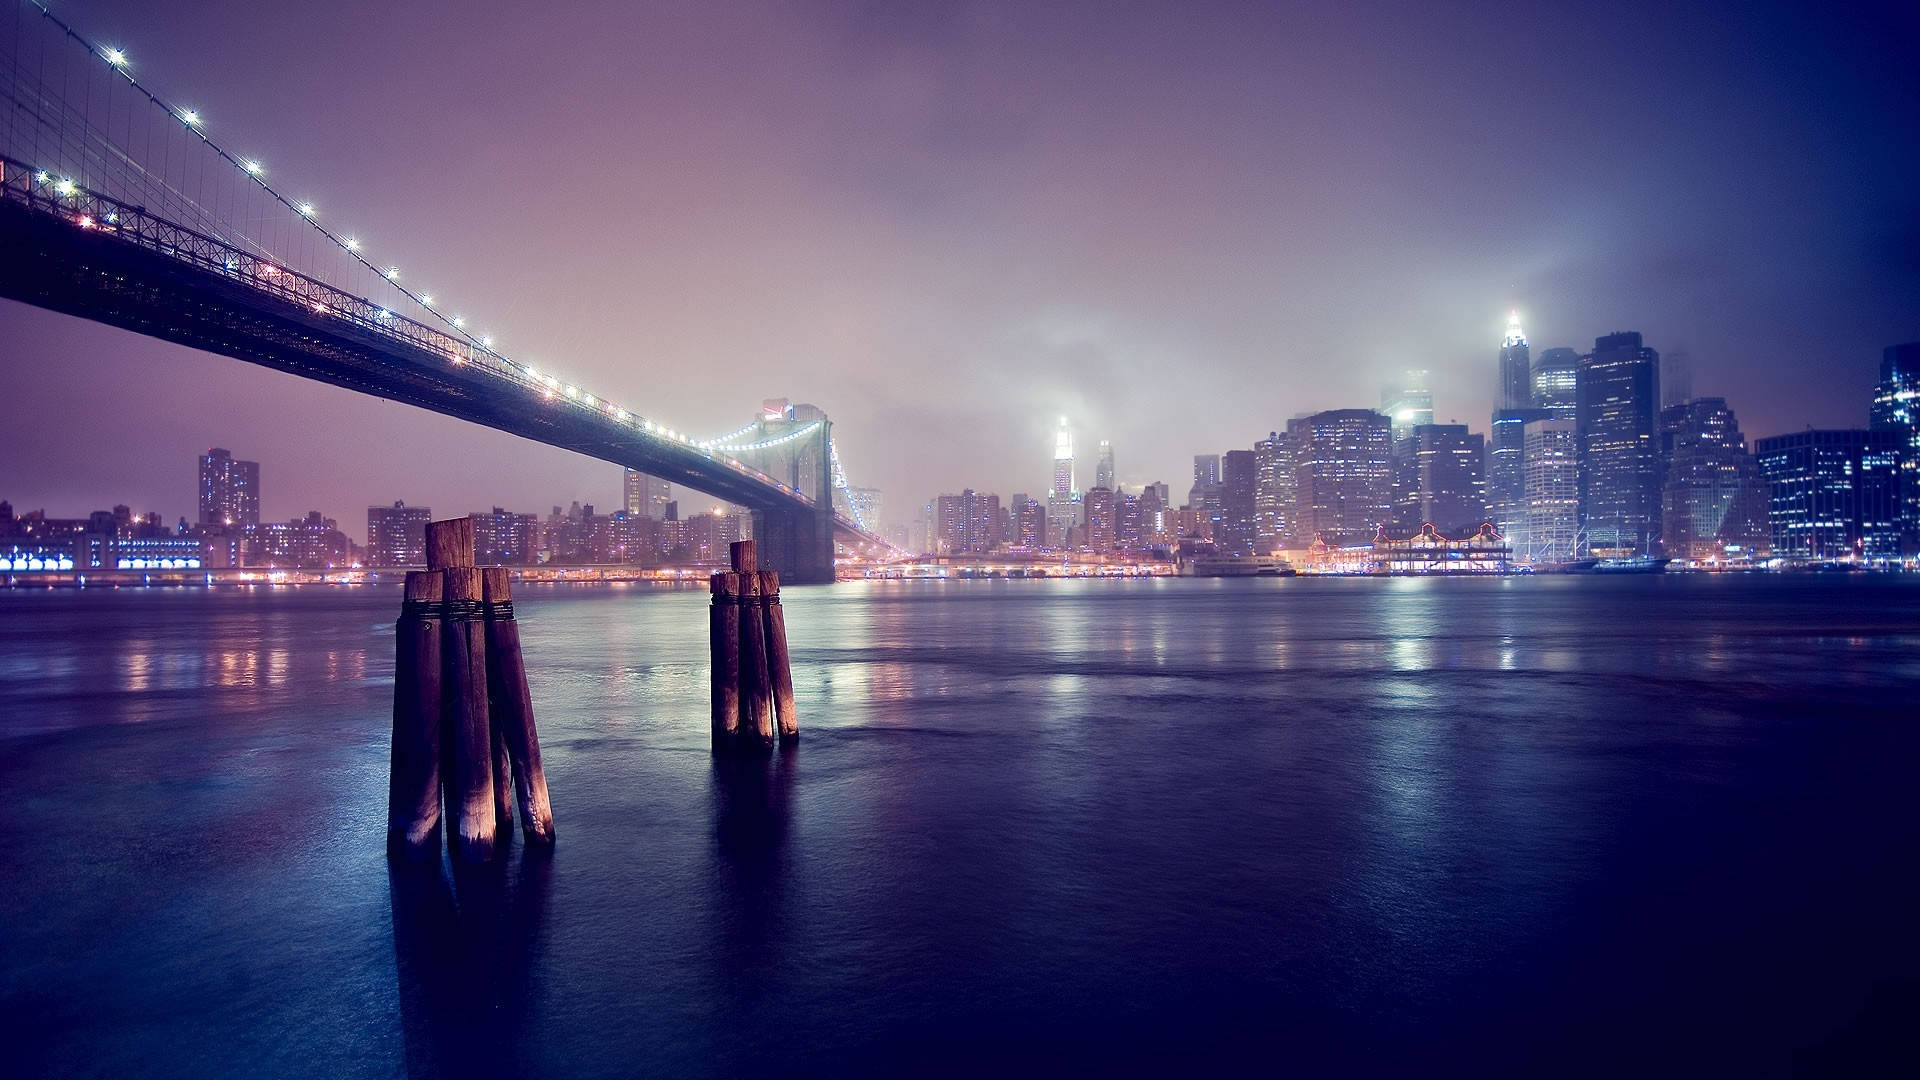 A bridge over water at night - Night, city